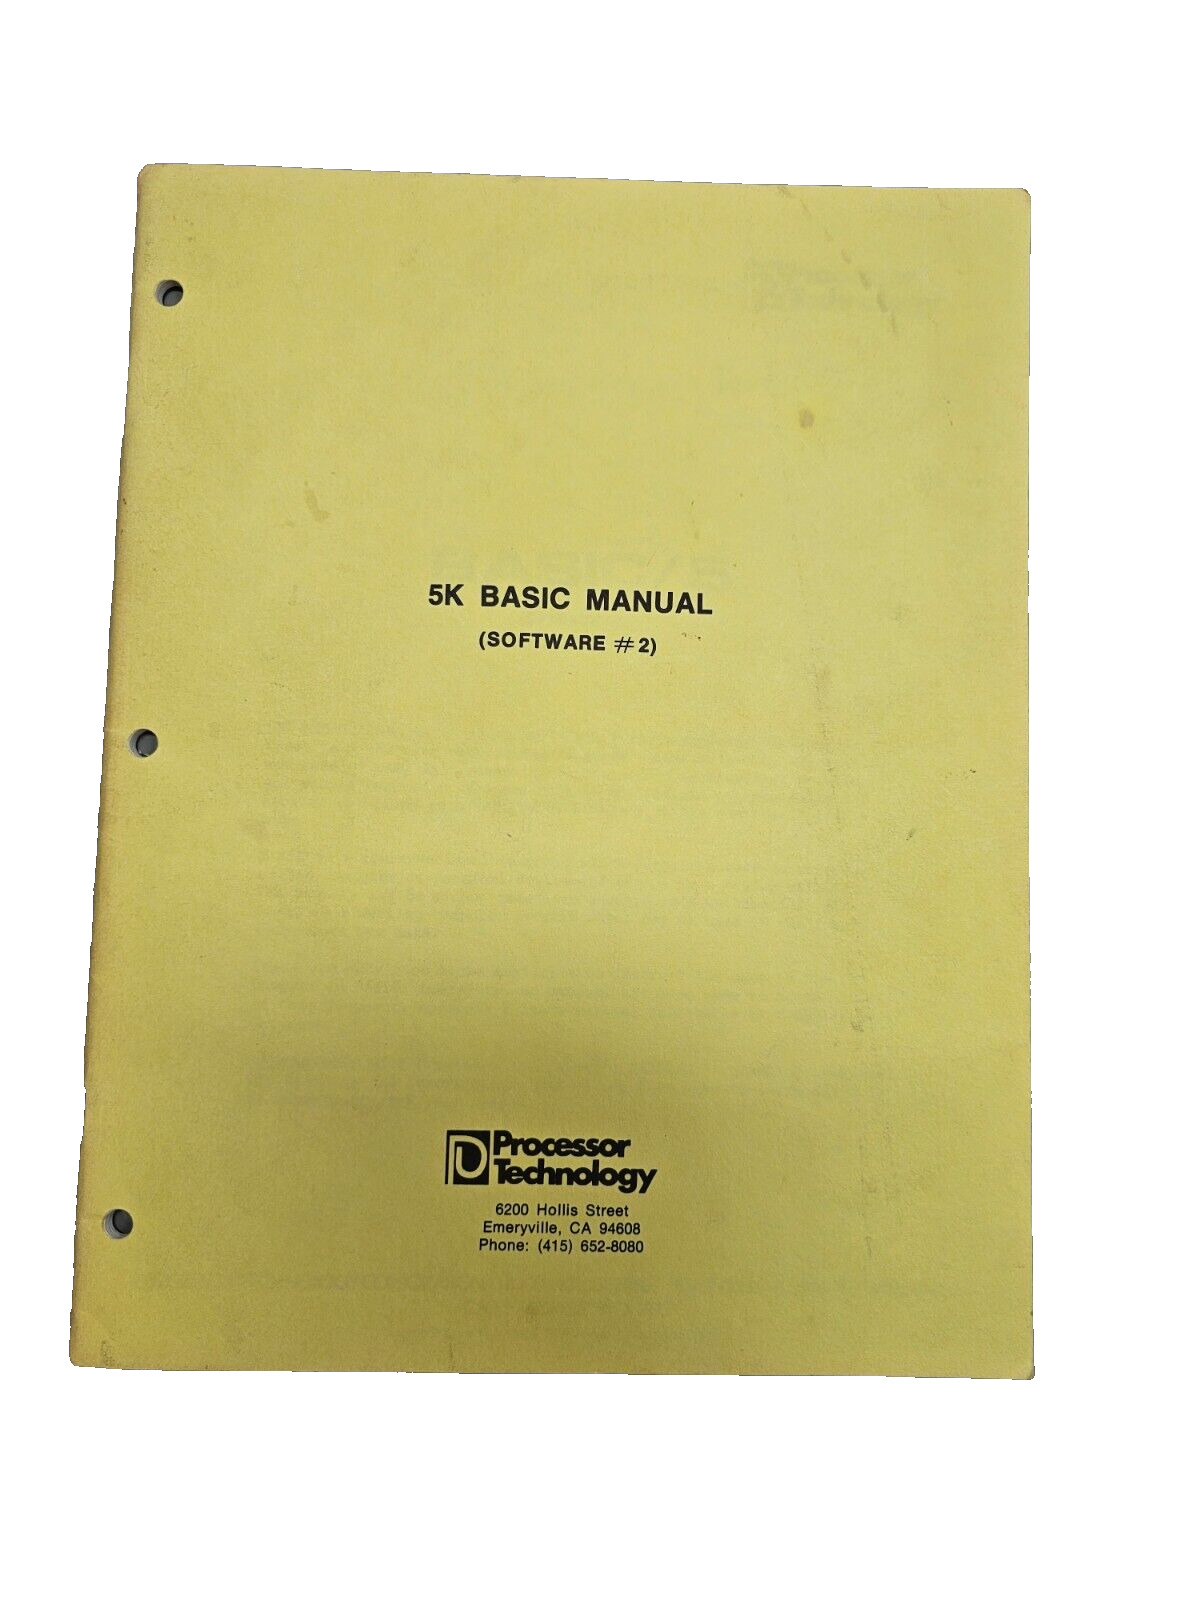 Vintage 1976 Processor Techonlogy 5K Basic Manual (Software #2)